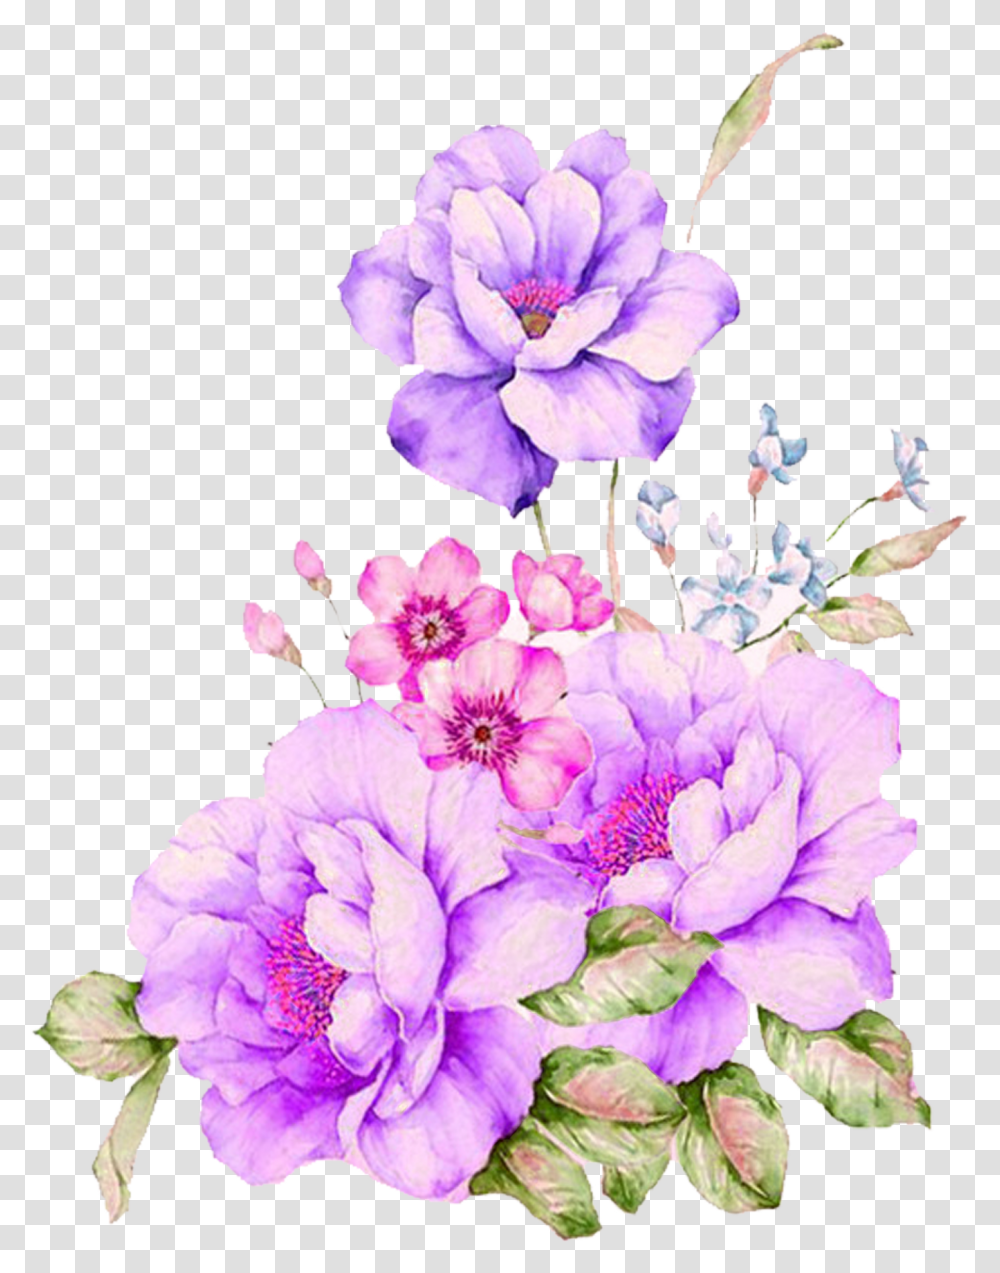 Watercolour Watercolor Flowers Painting Watercolor Painting Flowers, Plant, Geranium, Blossom, Floral Design Transparent Png